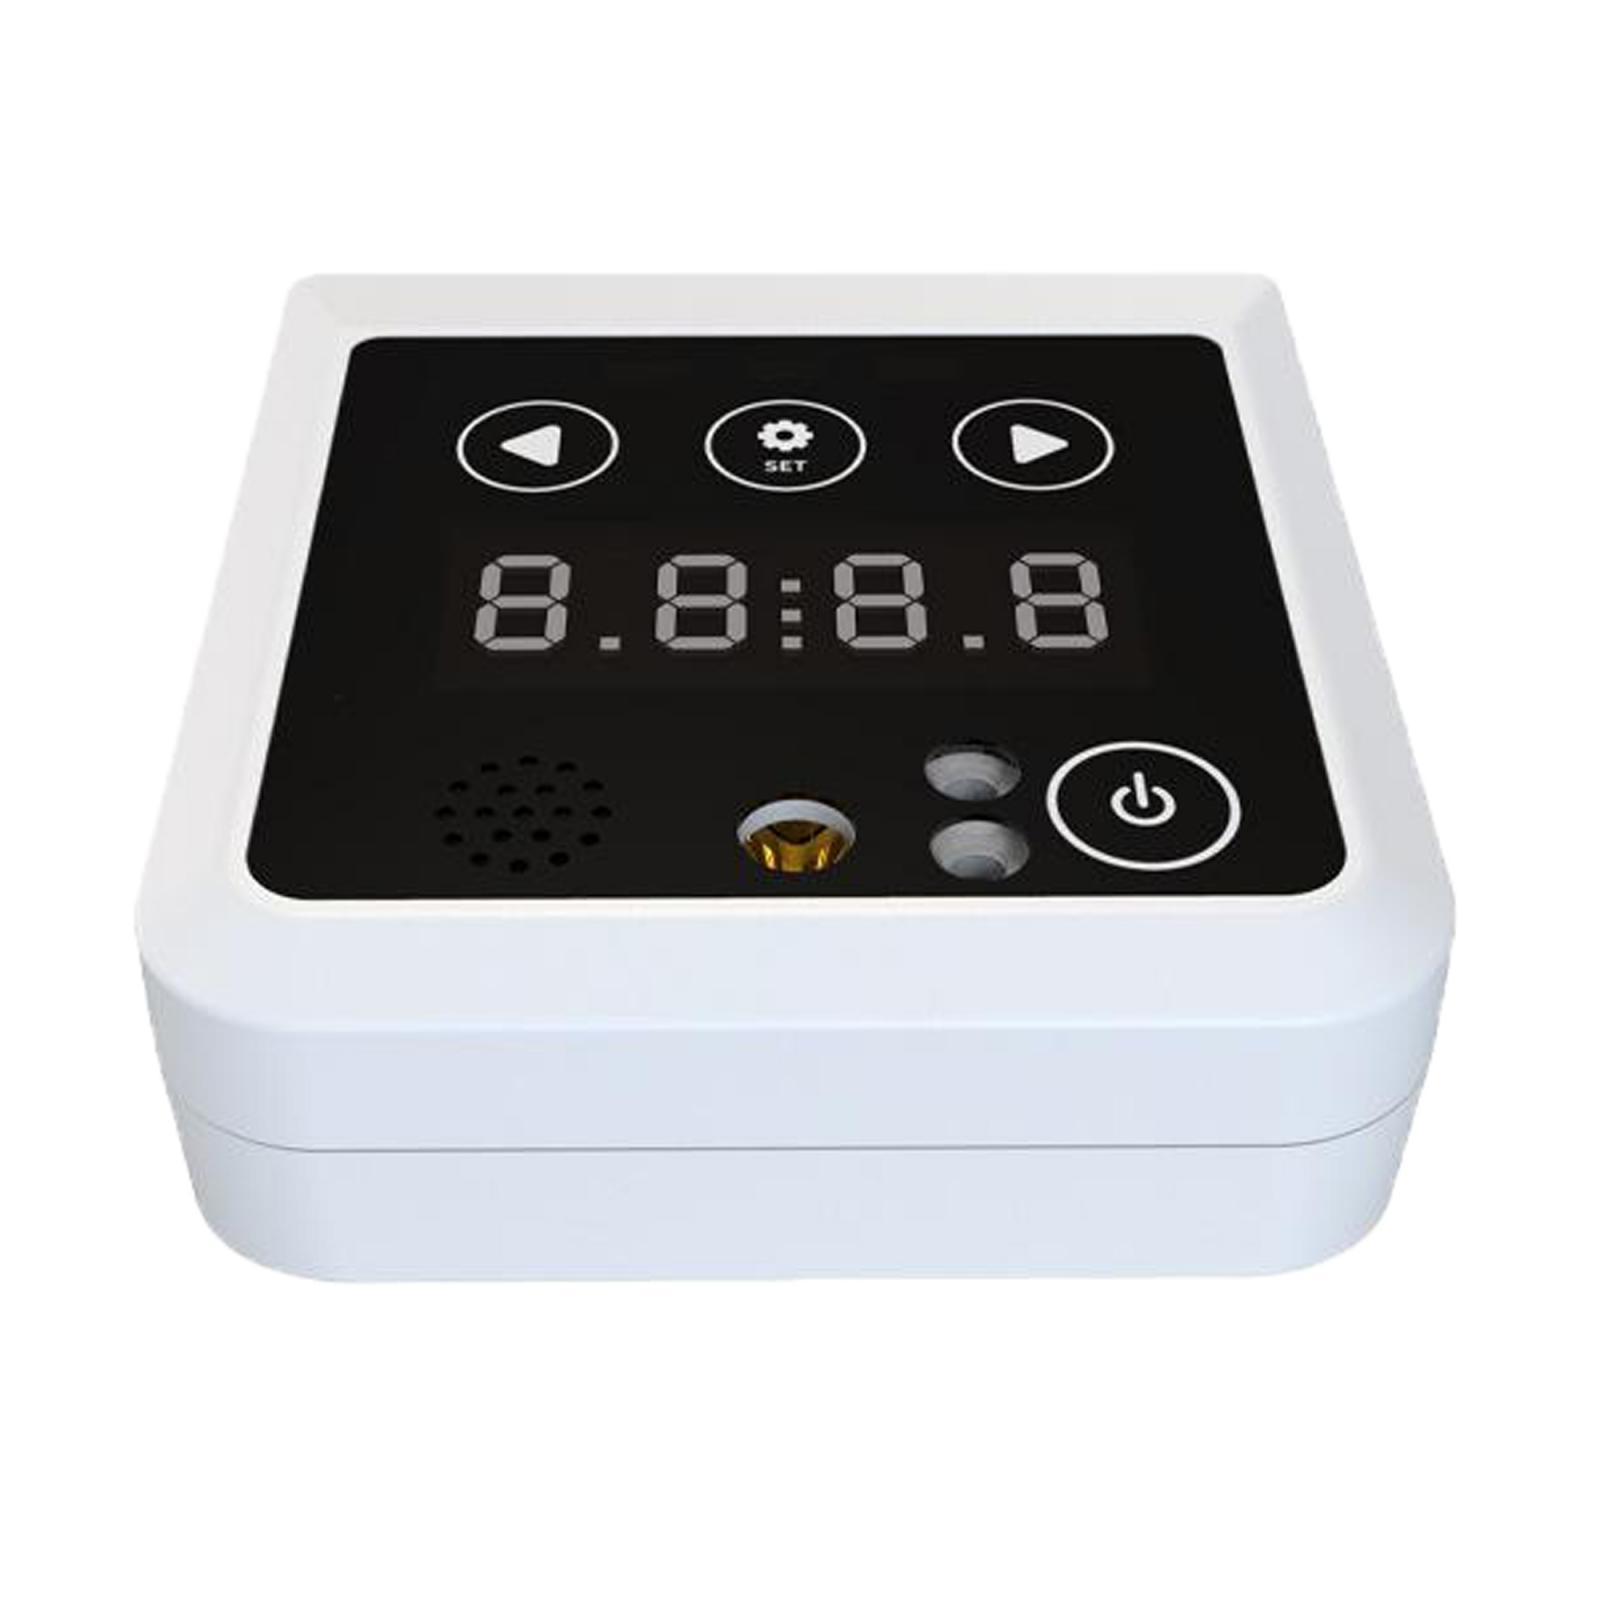 K2 Portable Mini Non- Infrared Thermometer Accurate Alarm Function